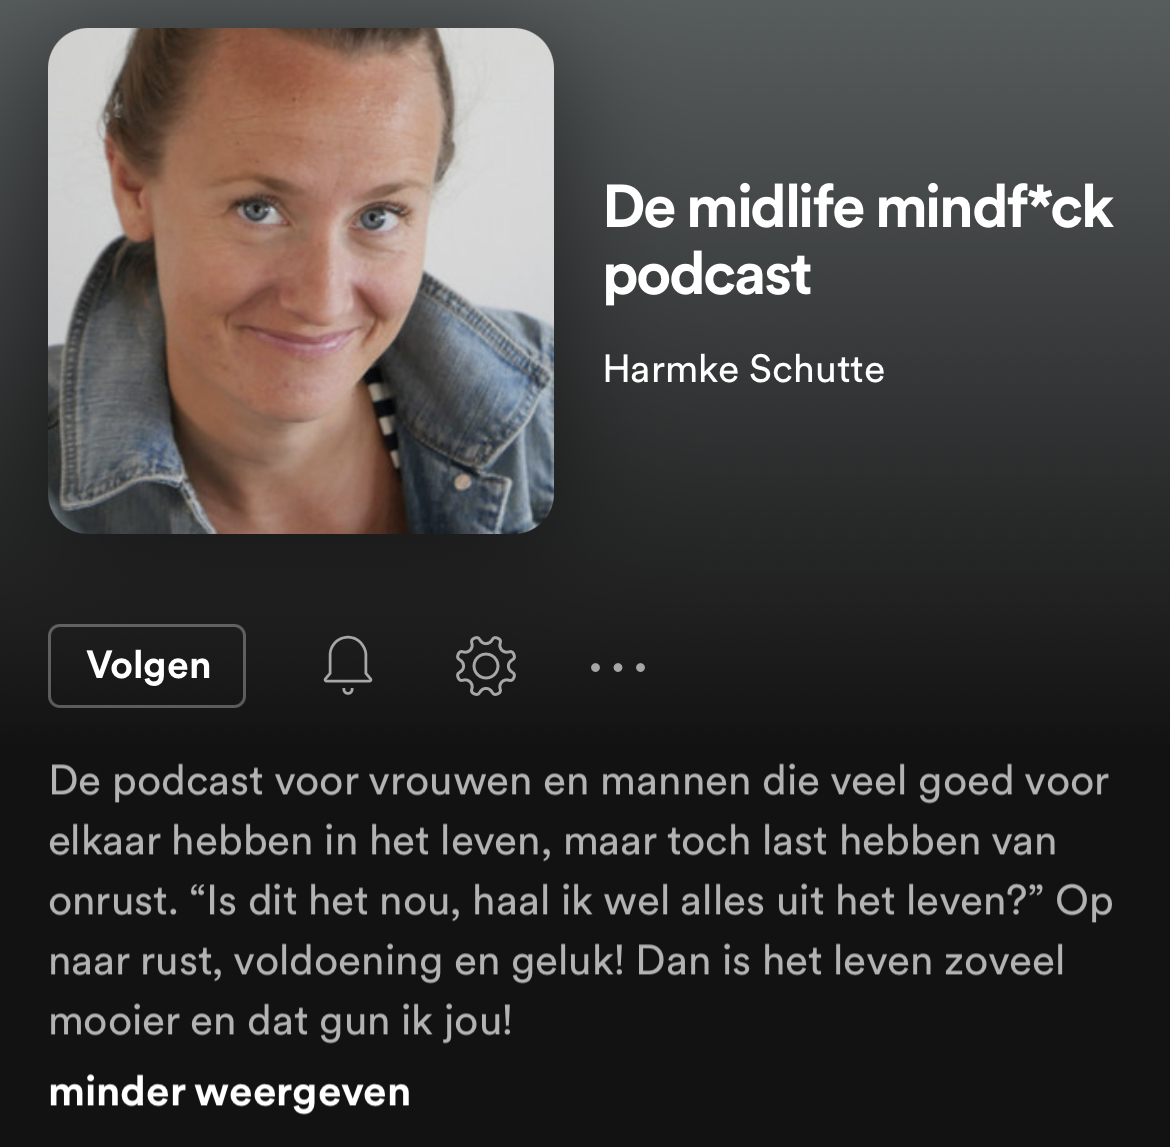 midlife mindfuck podcast_harmke schutte